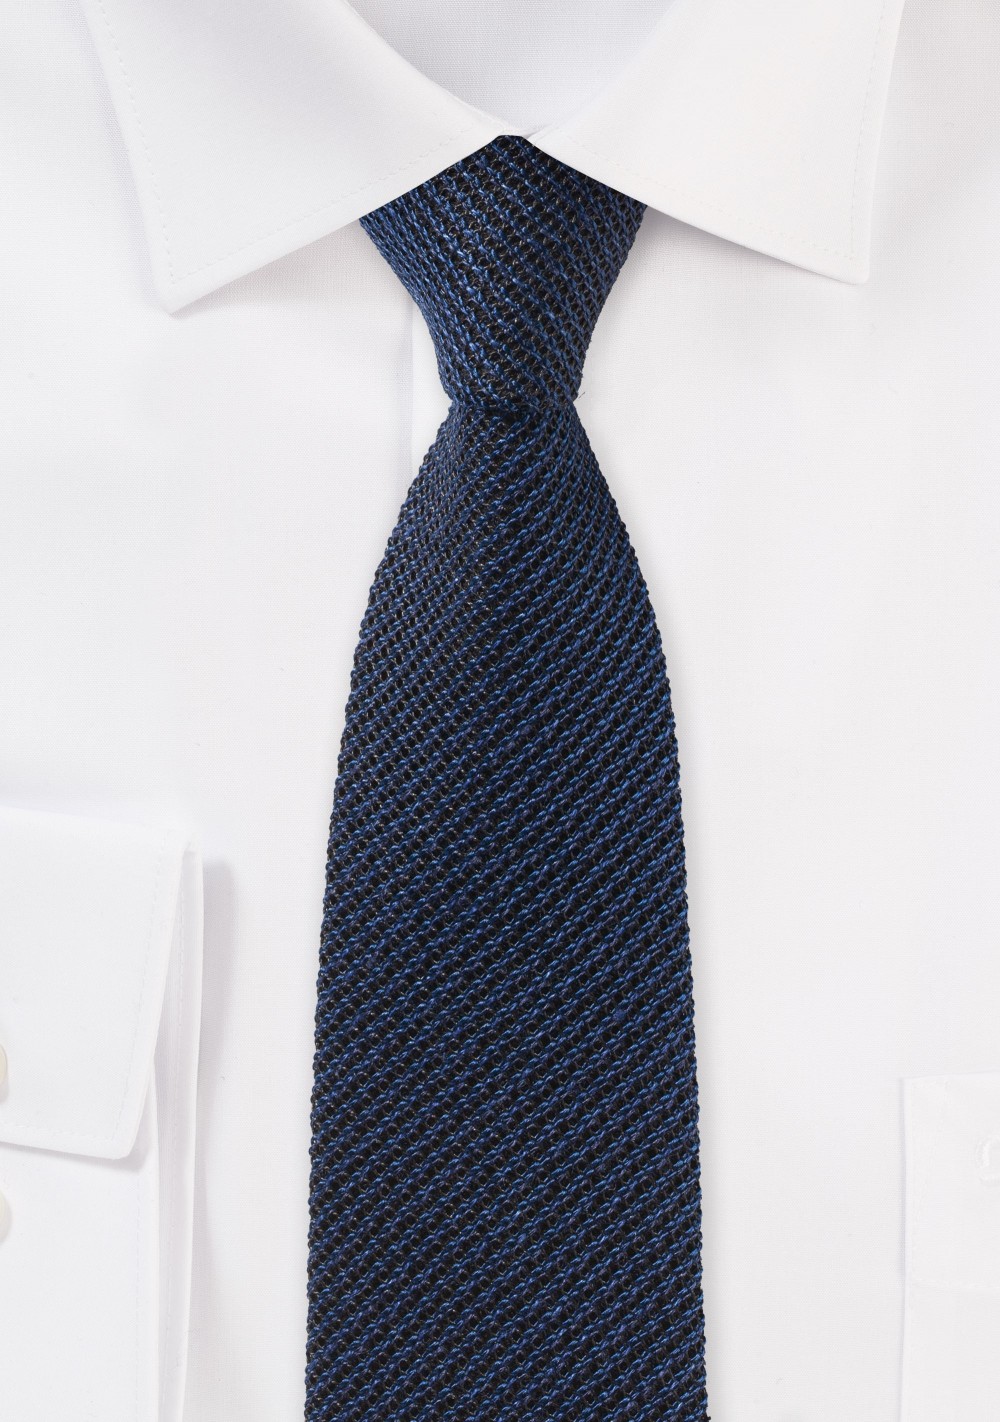 Knit Texture Skinny Tie in Navy